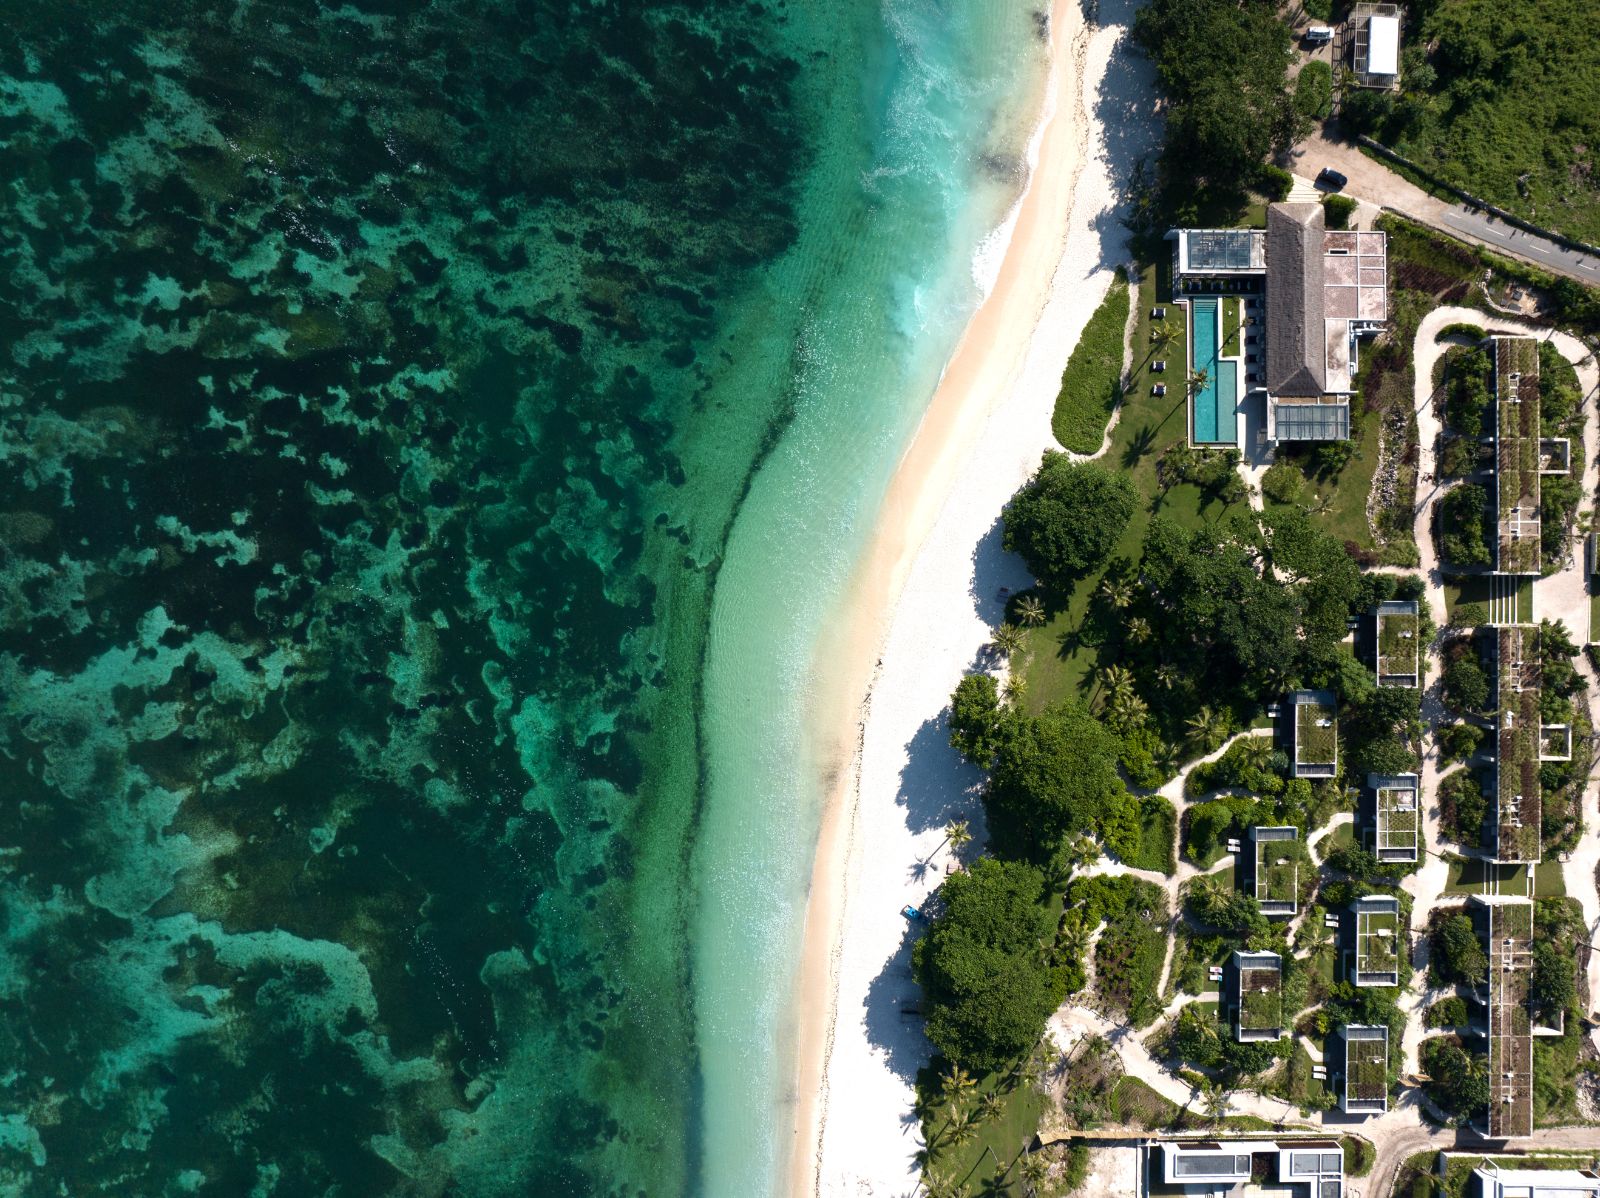 Aerial view of Cap Karoso resort on the island of Sumba in Indonesia